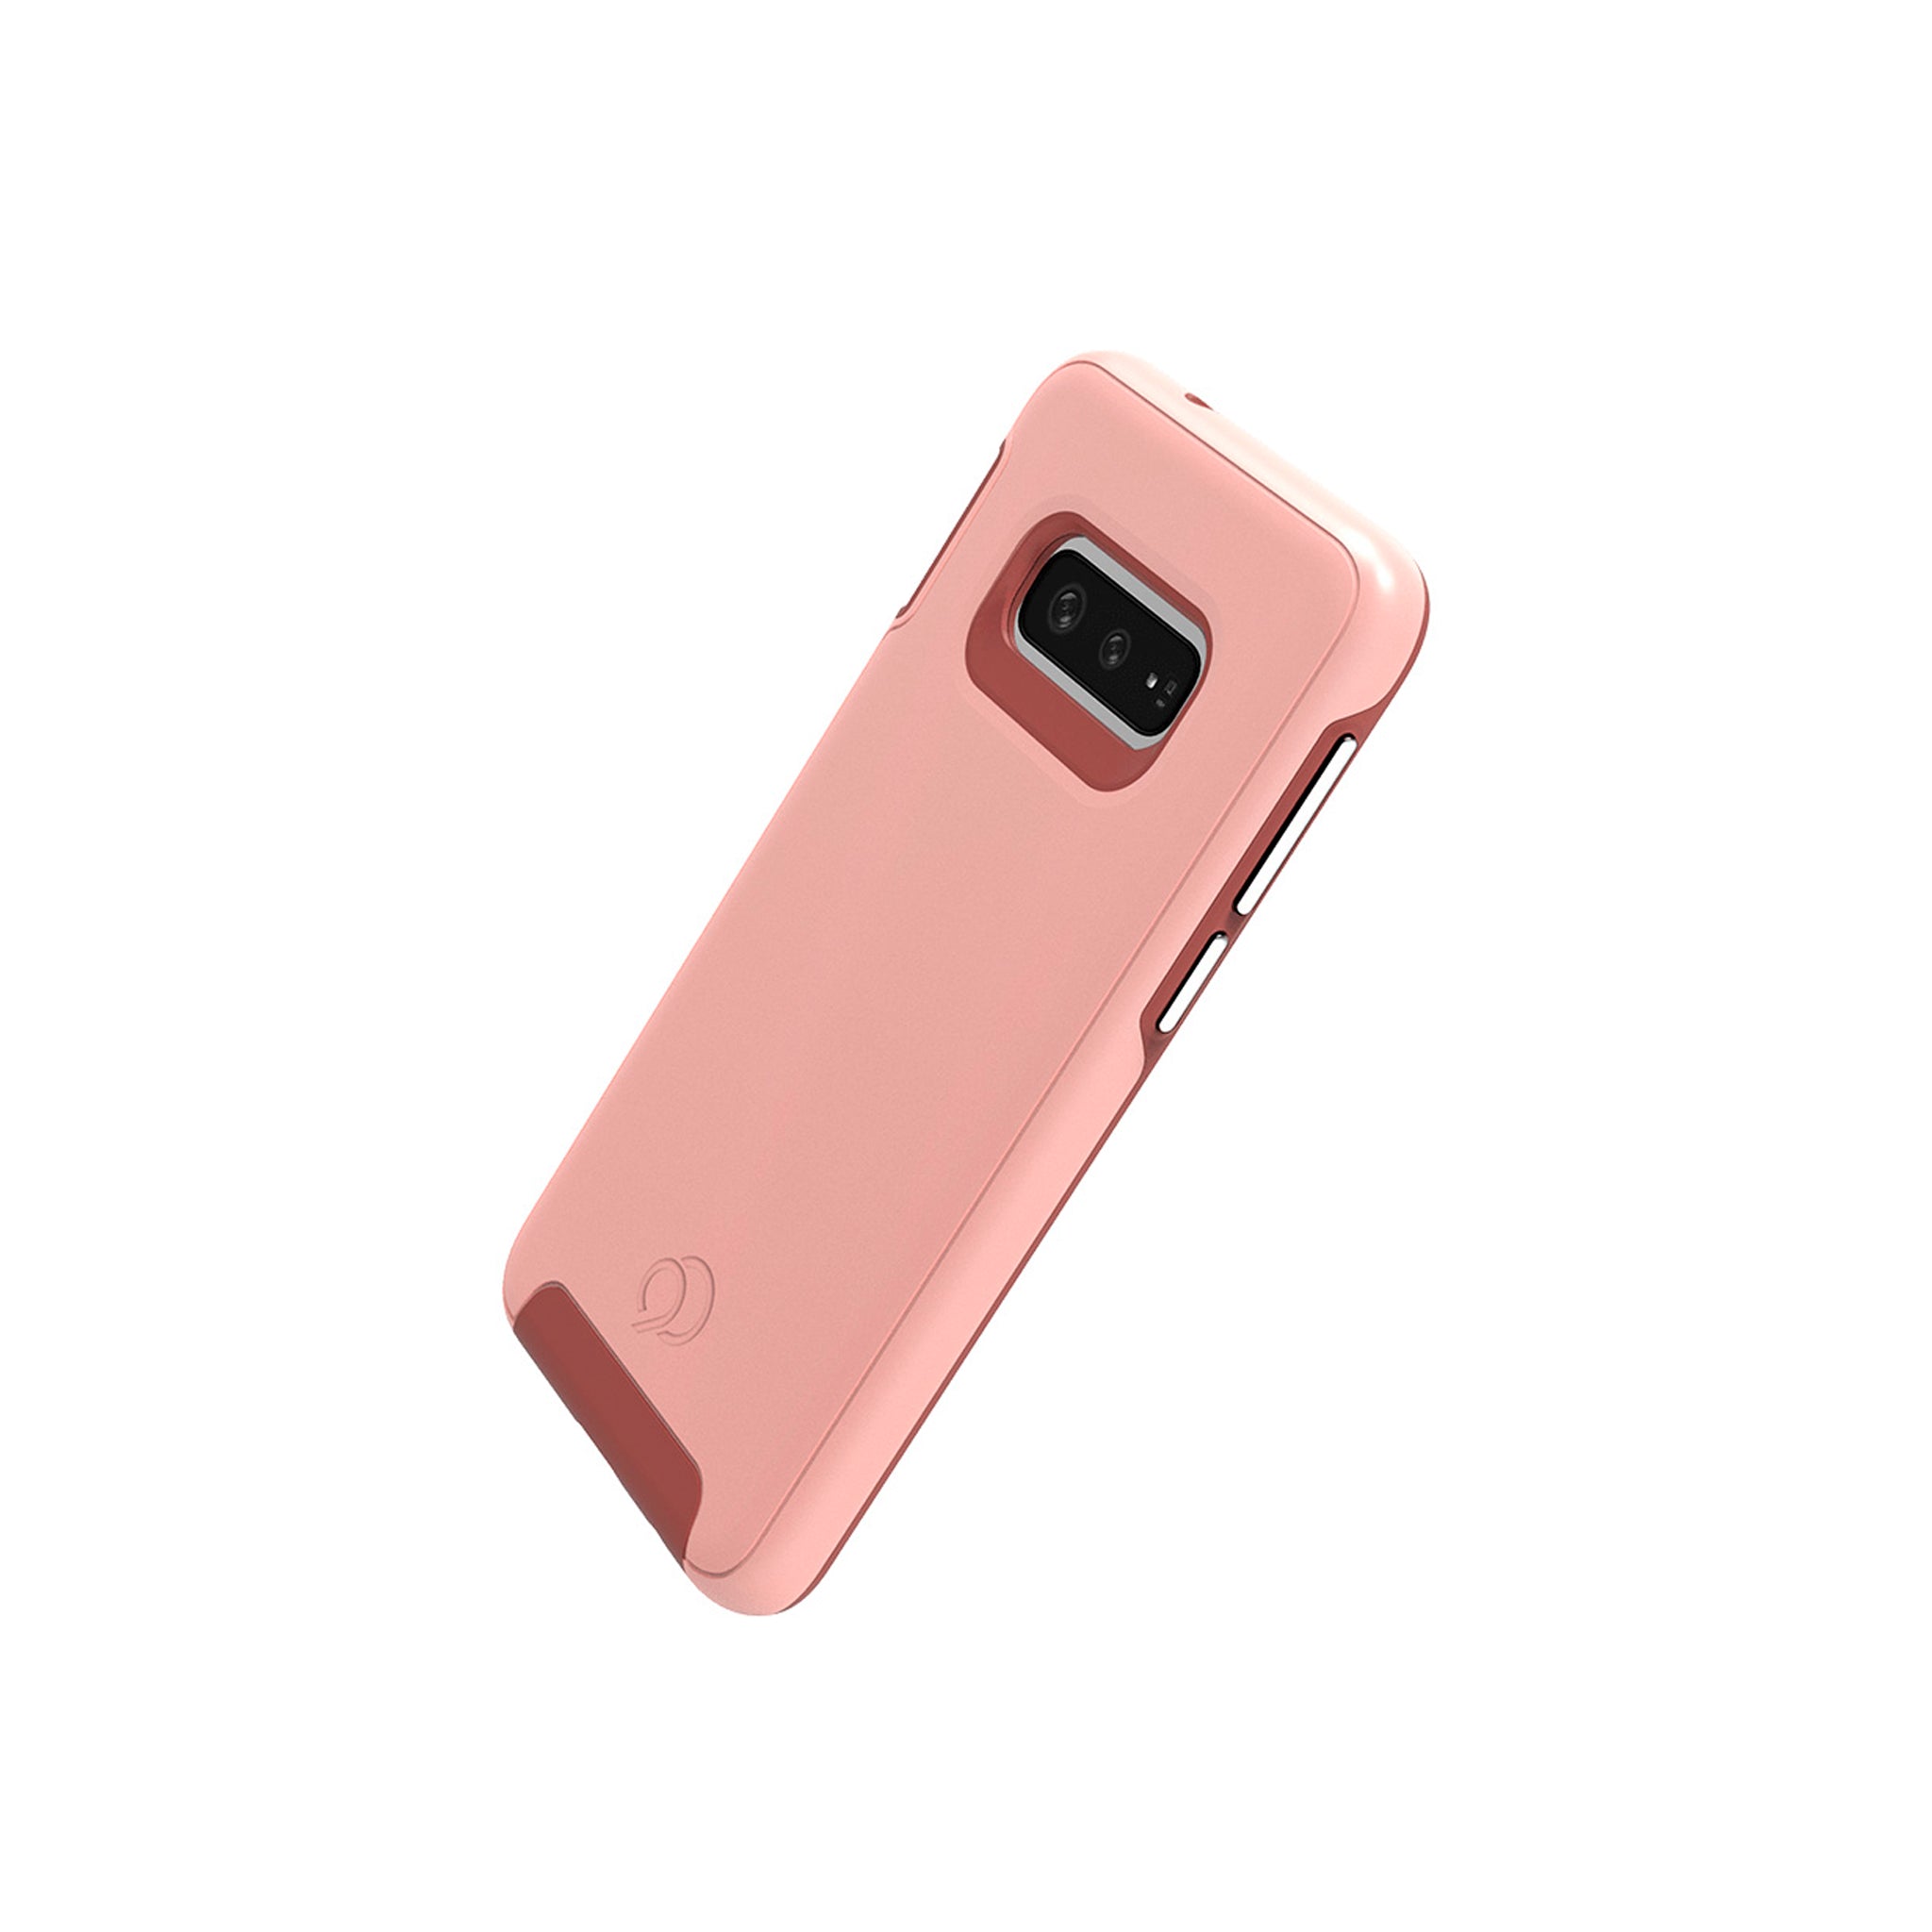 Nimbus9 - Cirrus 2 Case For Samsung Galaxy S10e - Rose Gold